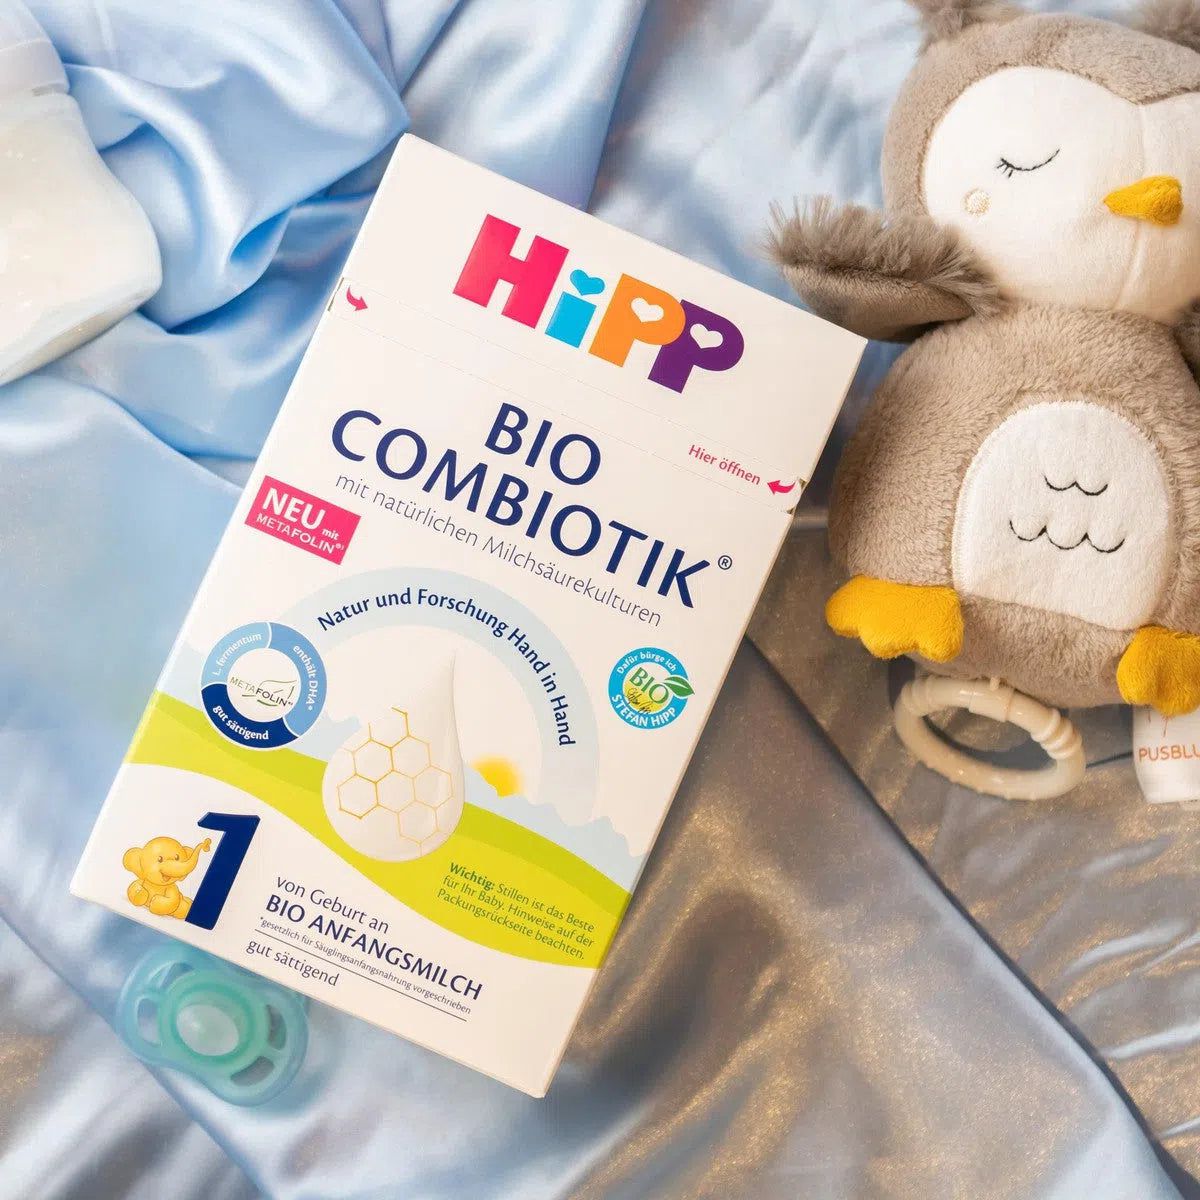 HiPP Stage 1 (0-6 Months) Organic Bio Combiotic Formula - German Version (600g)